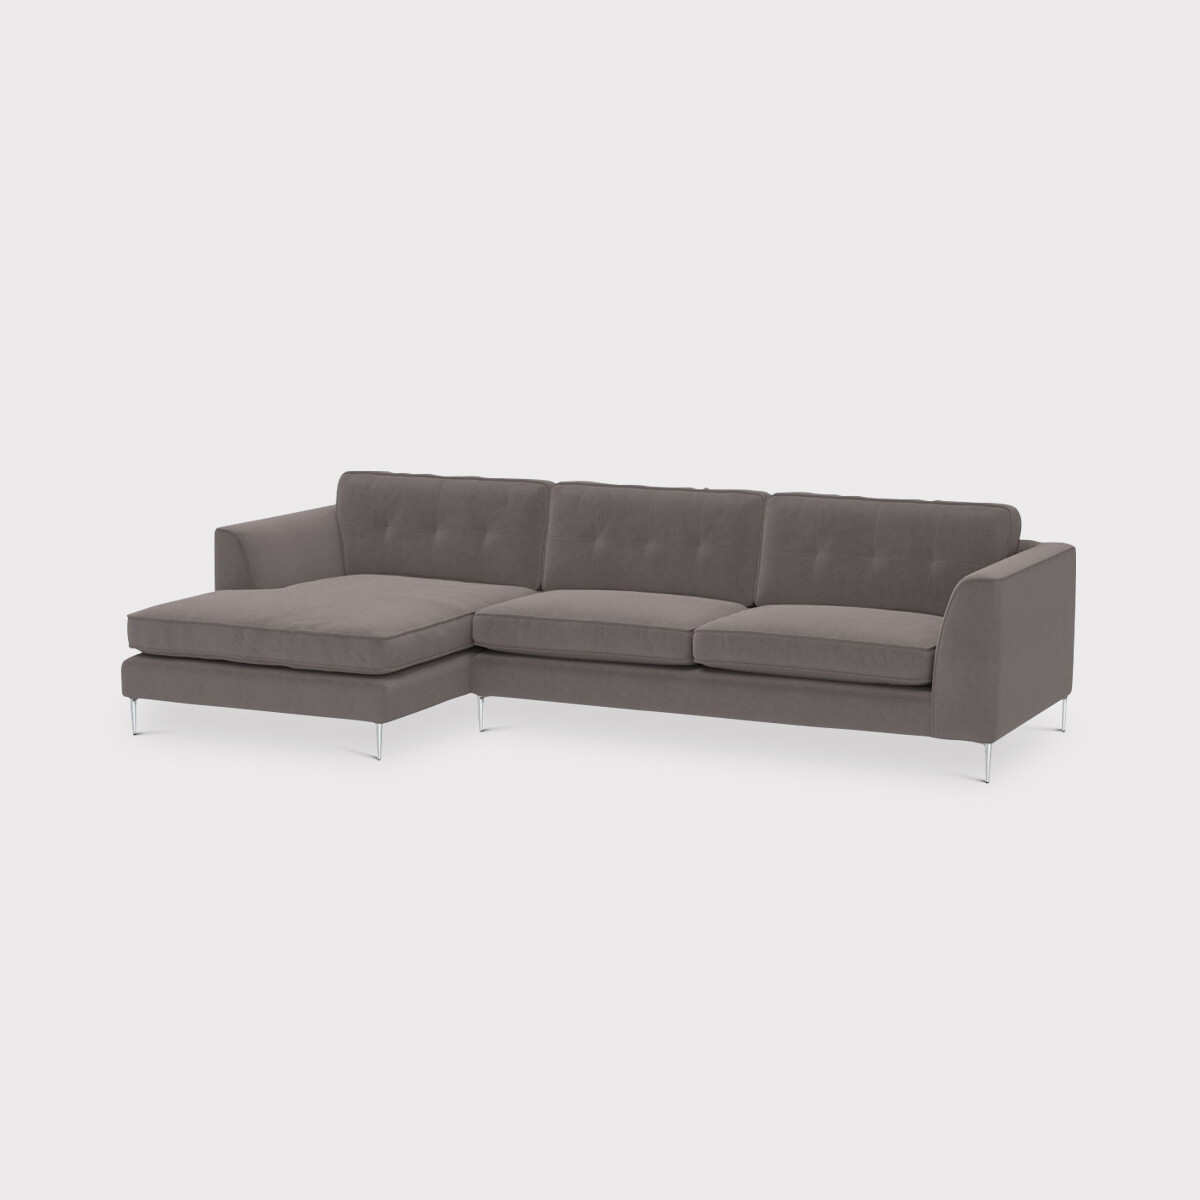 Conza Large Chaise Corner Sofa Left, Grey Fabric | Barker & Stonehouse